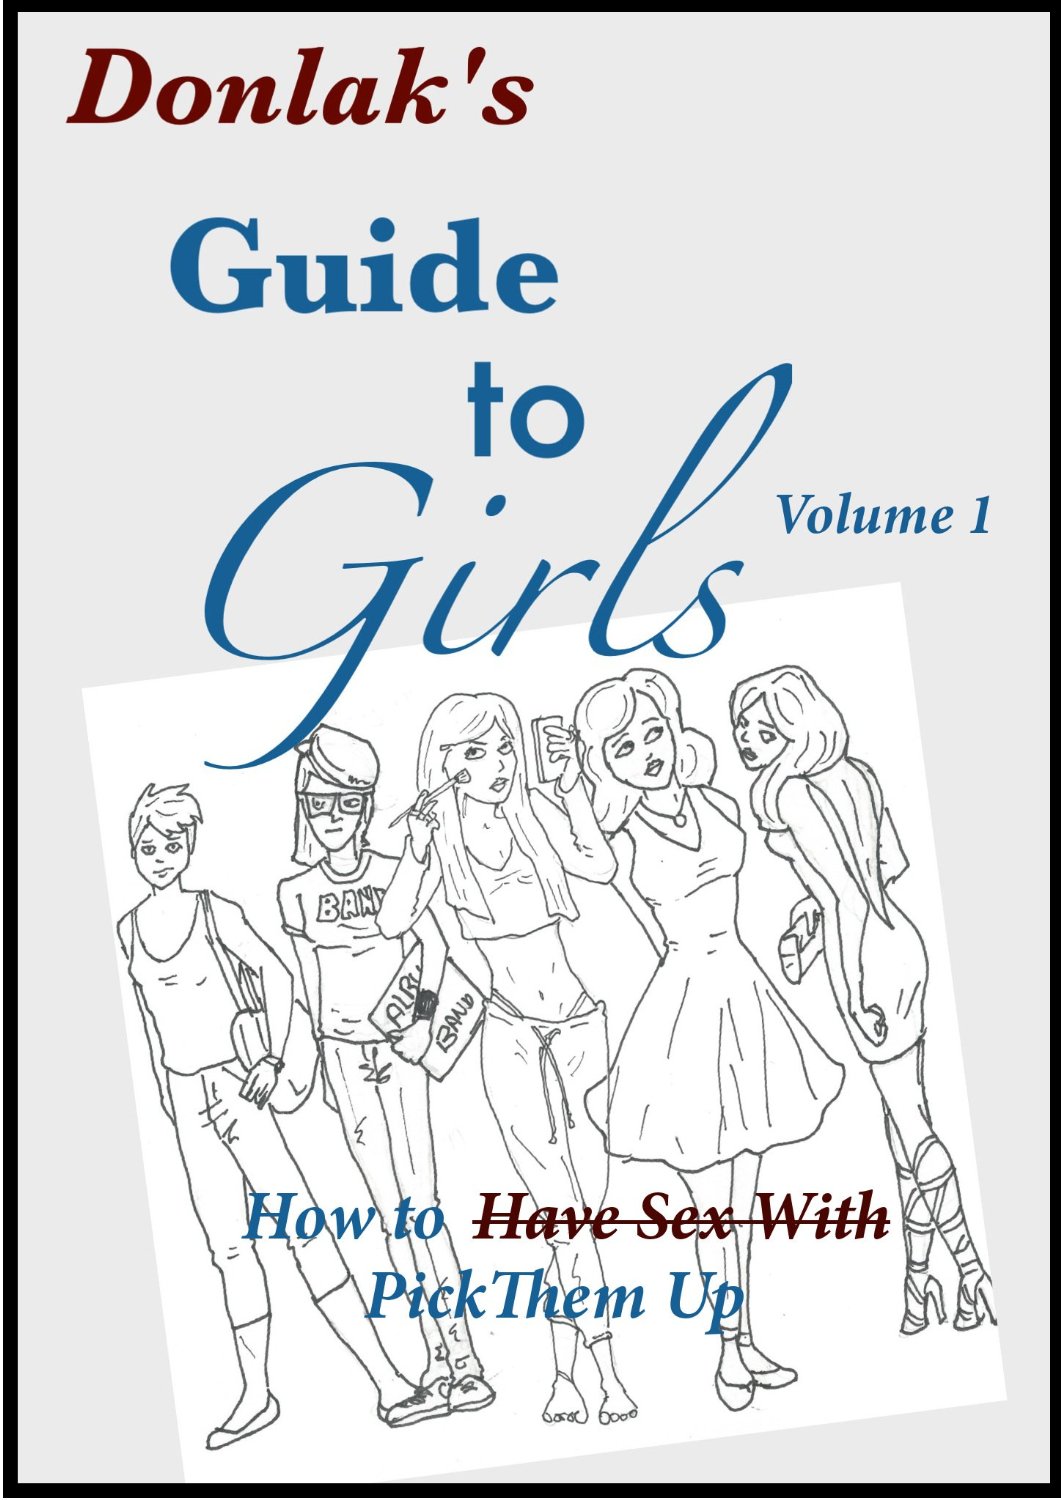 Donlak's Guide to Girls